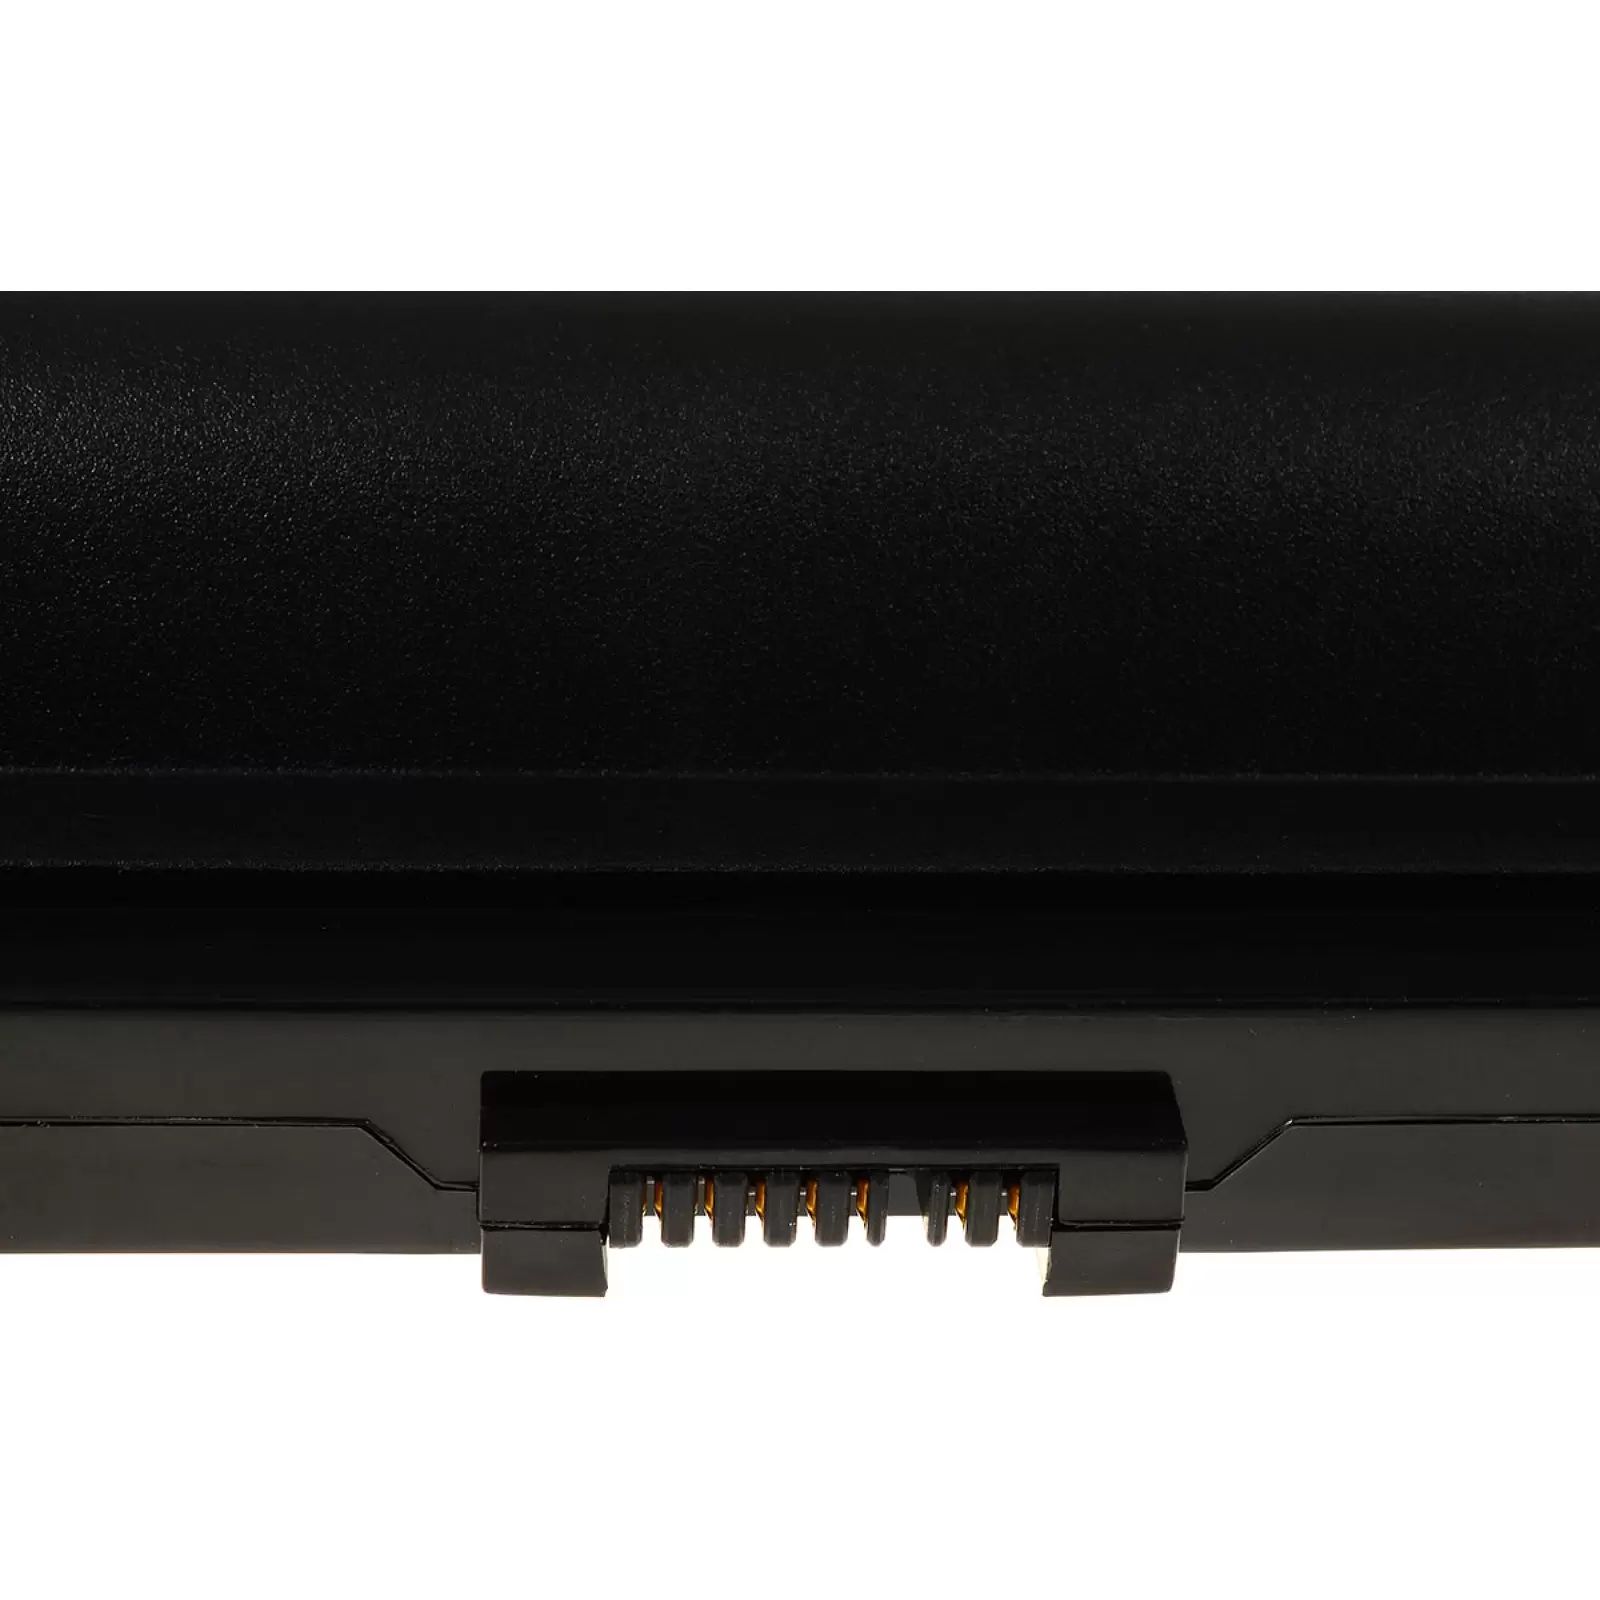 Powerakku für Laptop Lenovo IdeaPad Y480 Serie / Typ L11M6Y01 - 11,1V - 6600 mAh